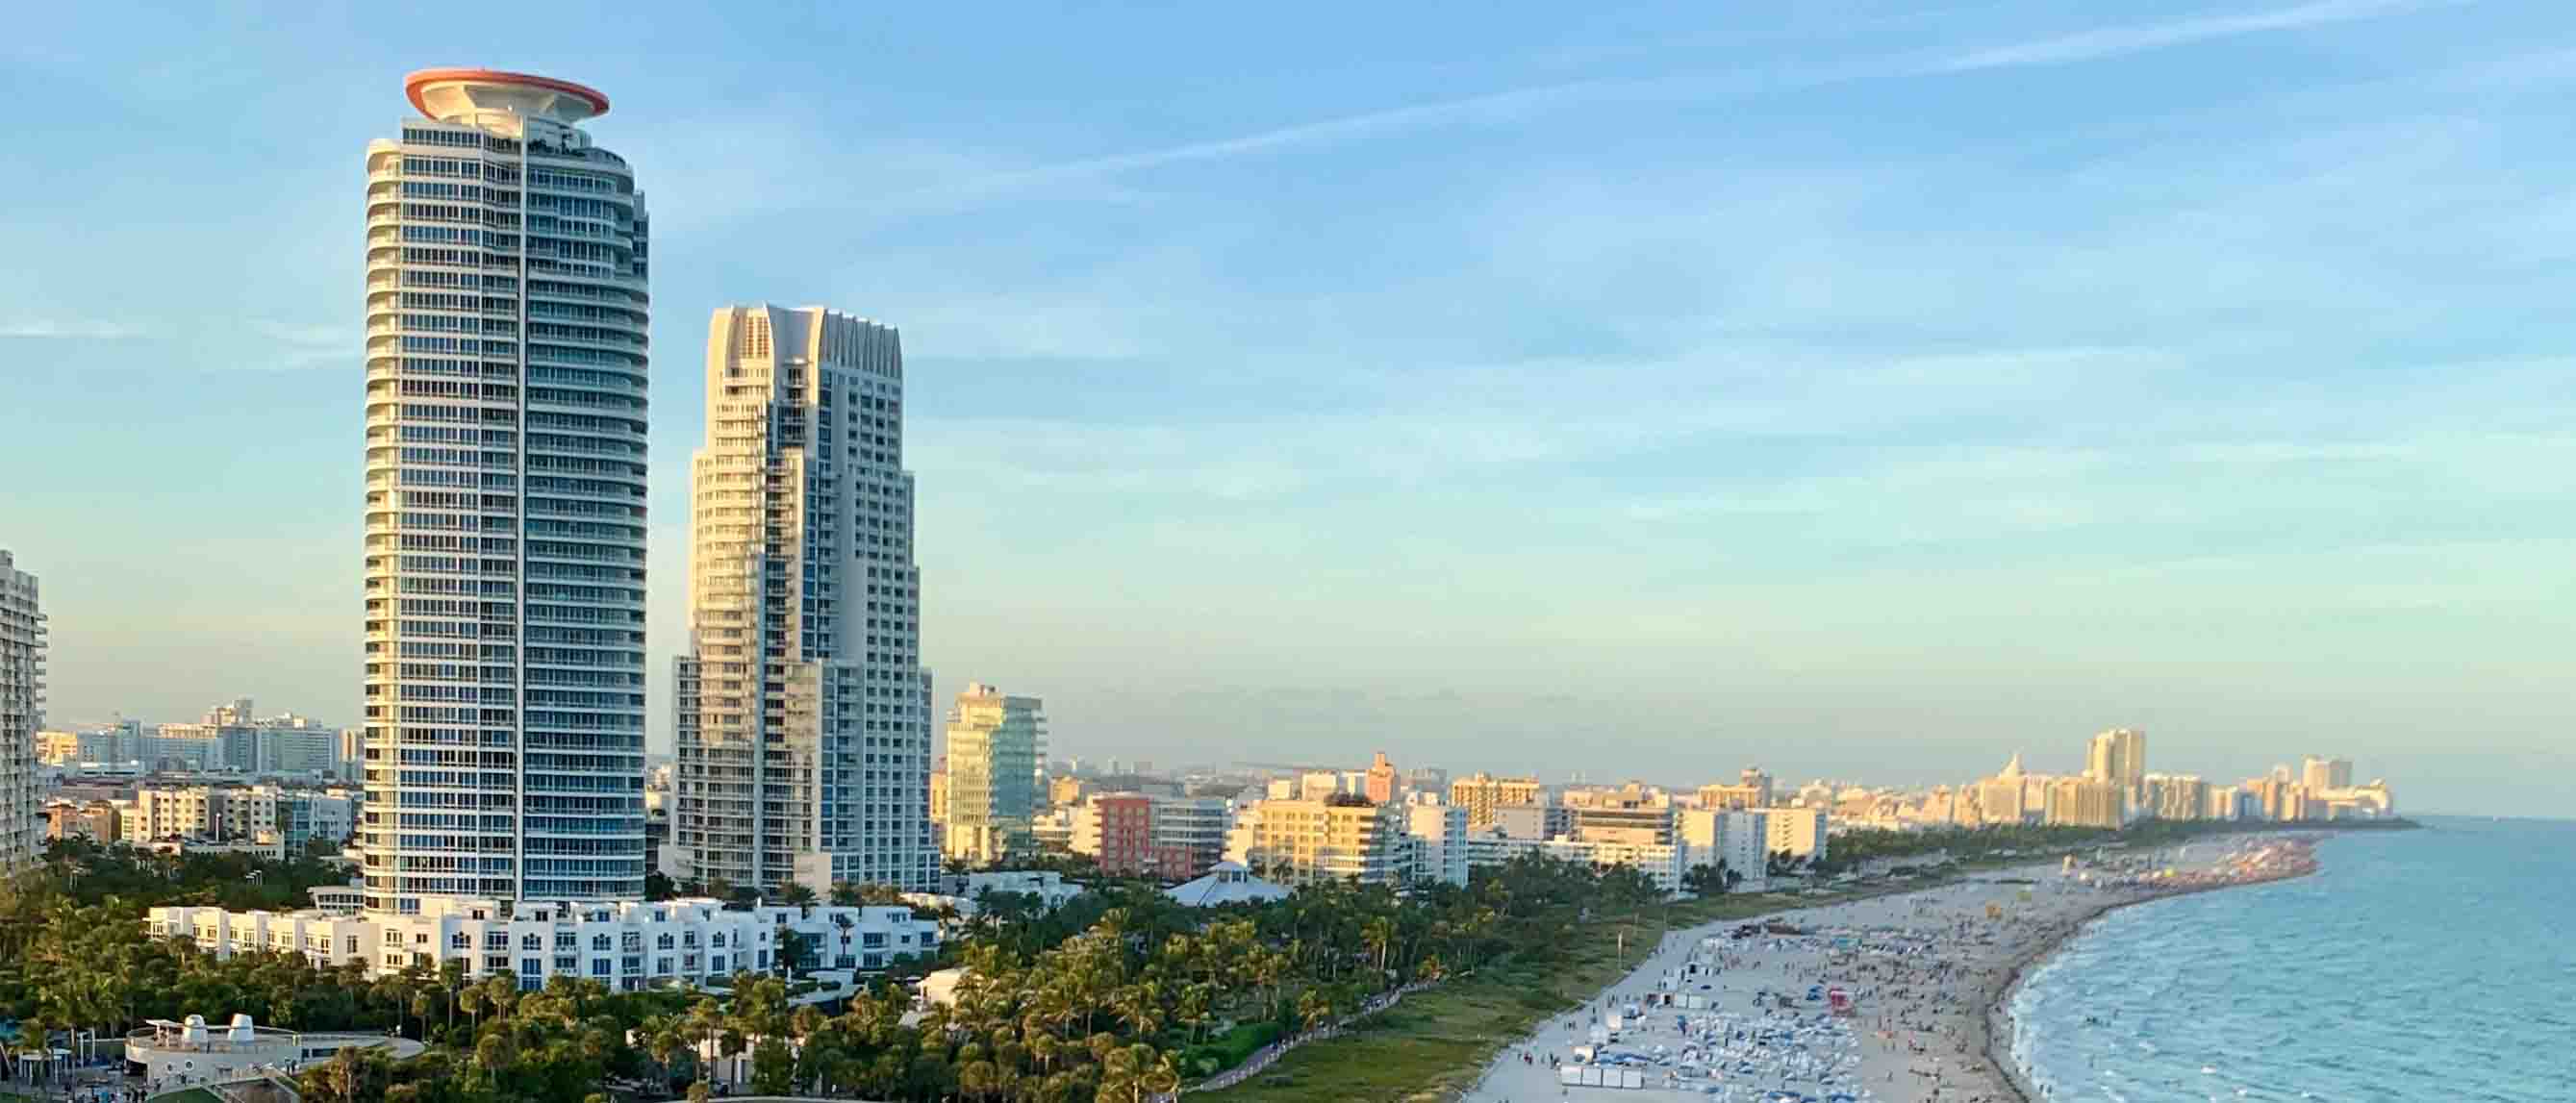 Image of Miami beach in Florida